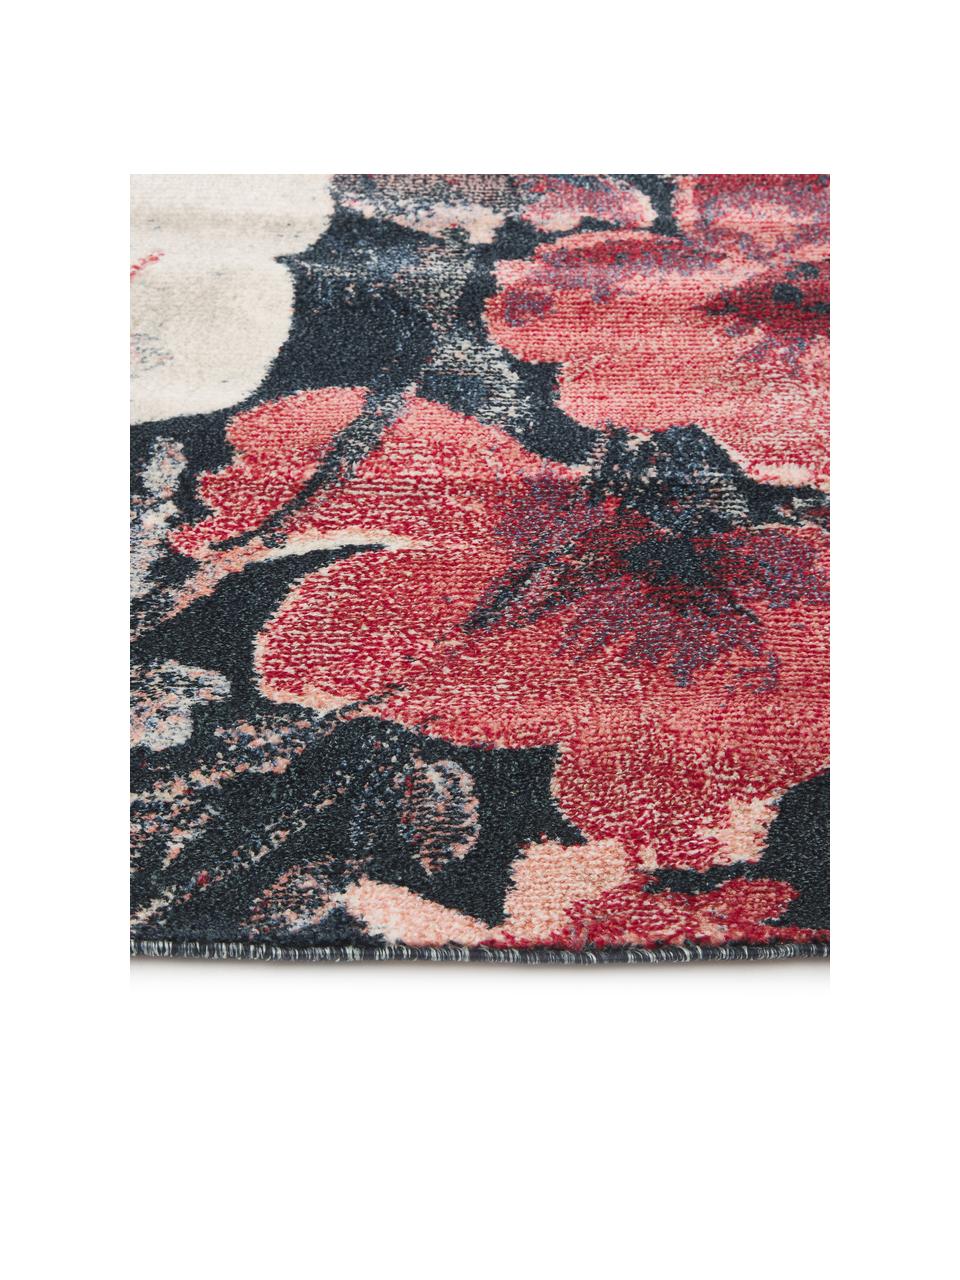 Teppich Peony mit Blumenmuster, 100% Polypropylen, Blau, Cremefarben, Rot, B 200 x L 290 cm (Größe L)